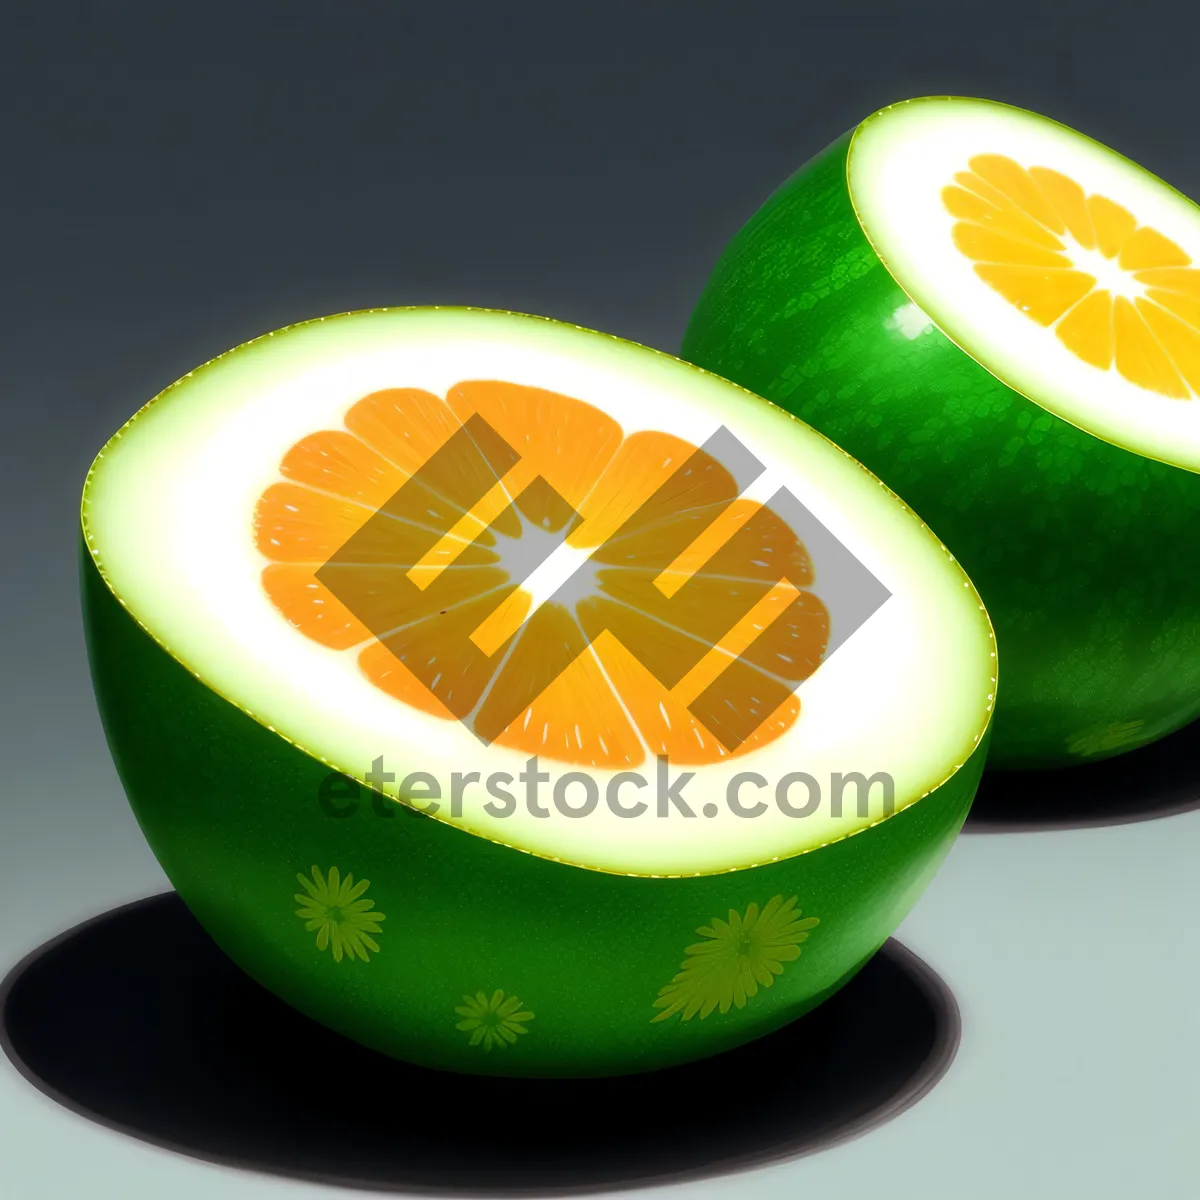 Picture of Refreshing Citrus Burst: Grapefruit, Lime, and Lemon Slices